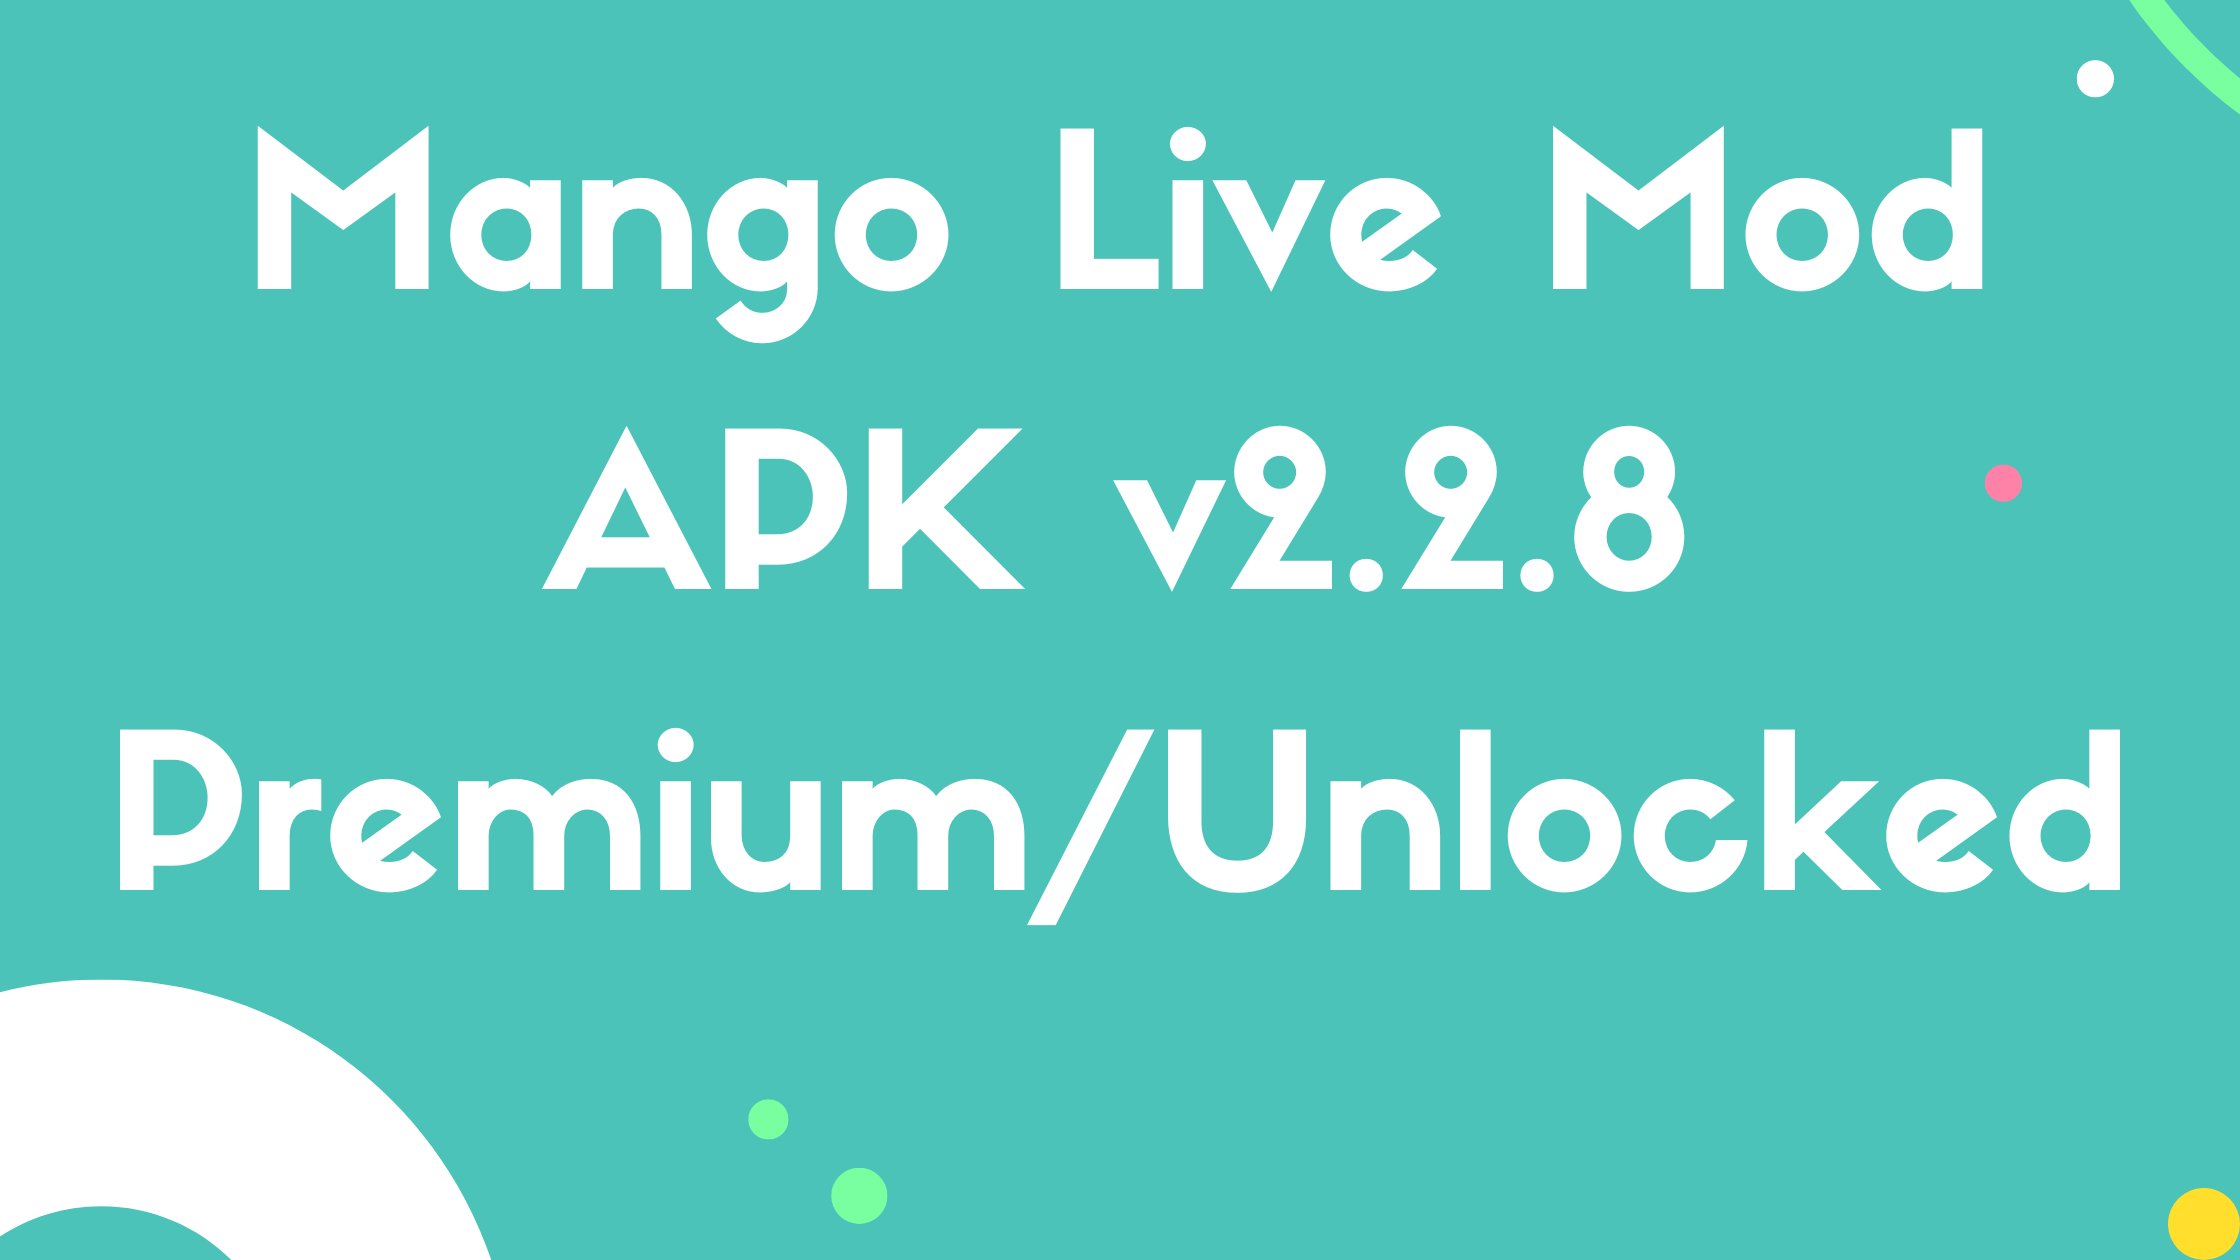 Mango Live Mod APK v2.2.8 Premium/Unlocked